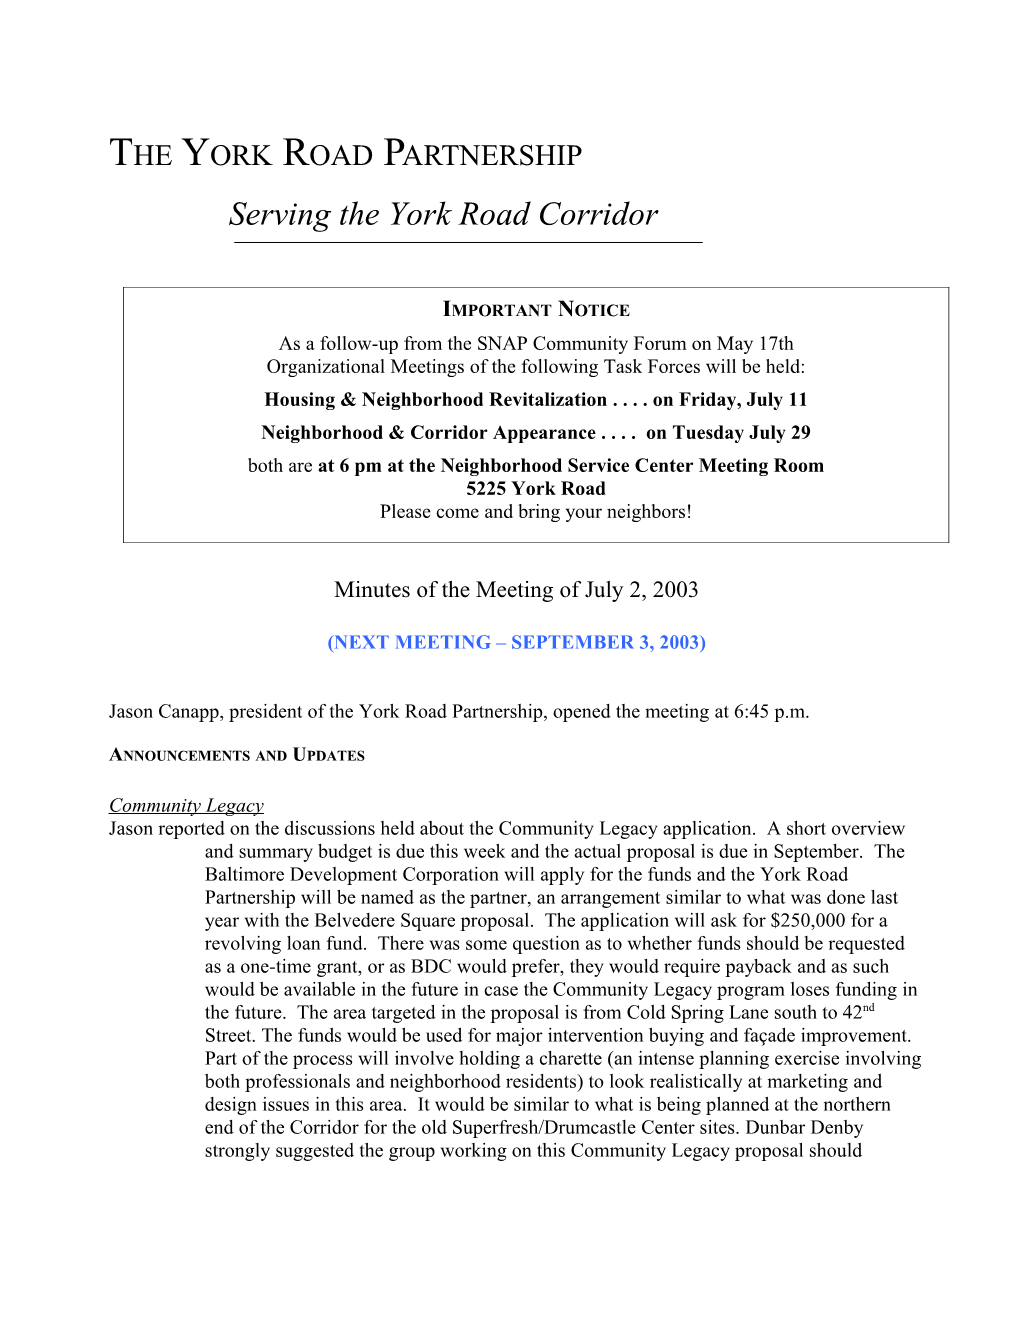 The York Road Partnership